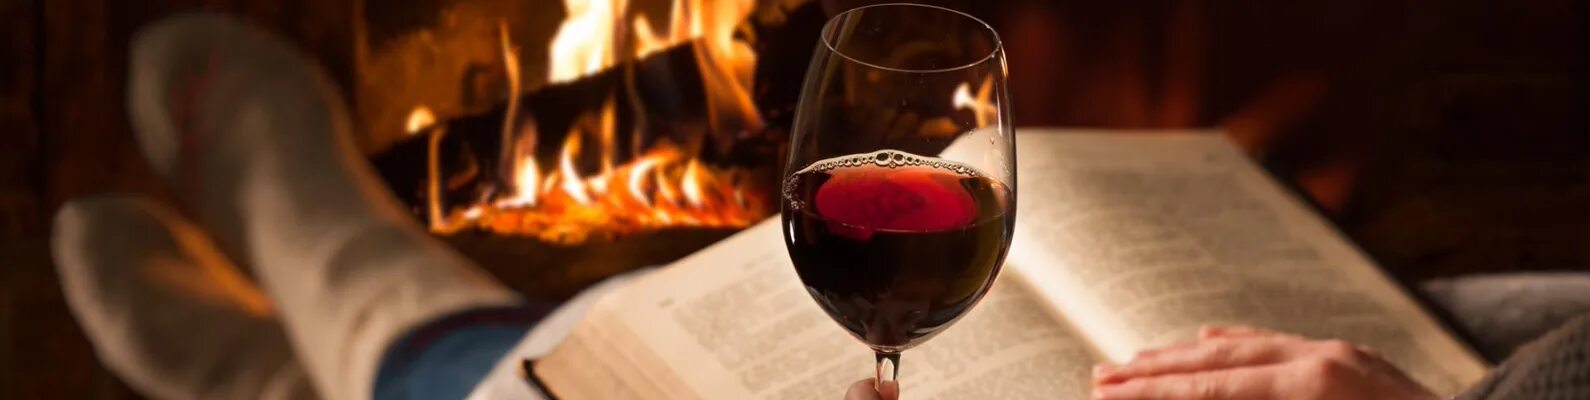 У камина с книгой и вином. Камин вино. Коньяк у камина. Вино в руке у камина. Бокал вина огонь